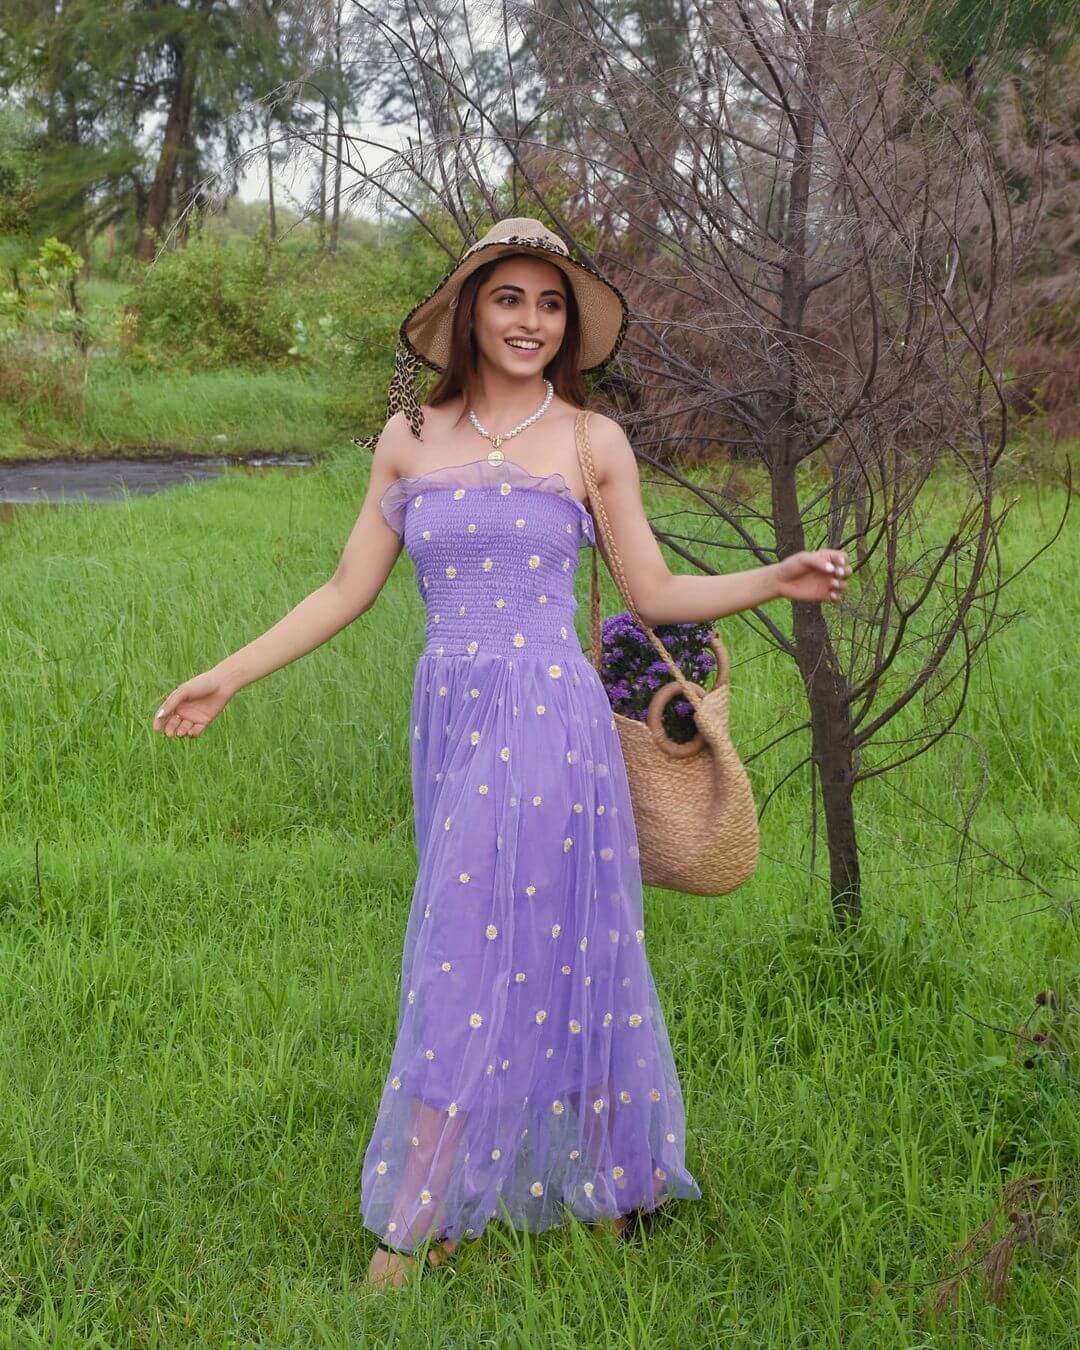 Niyati Fatnani Picnic Ready Look In Lavender Off-Shoulder Dress With Chic Hat